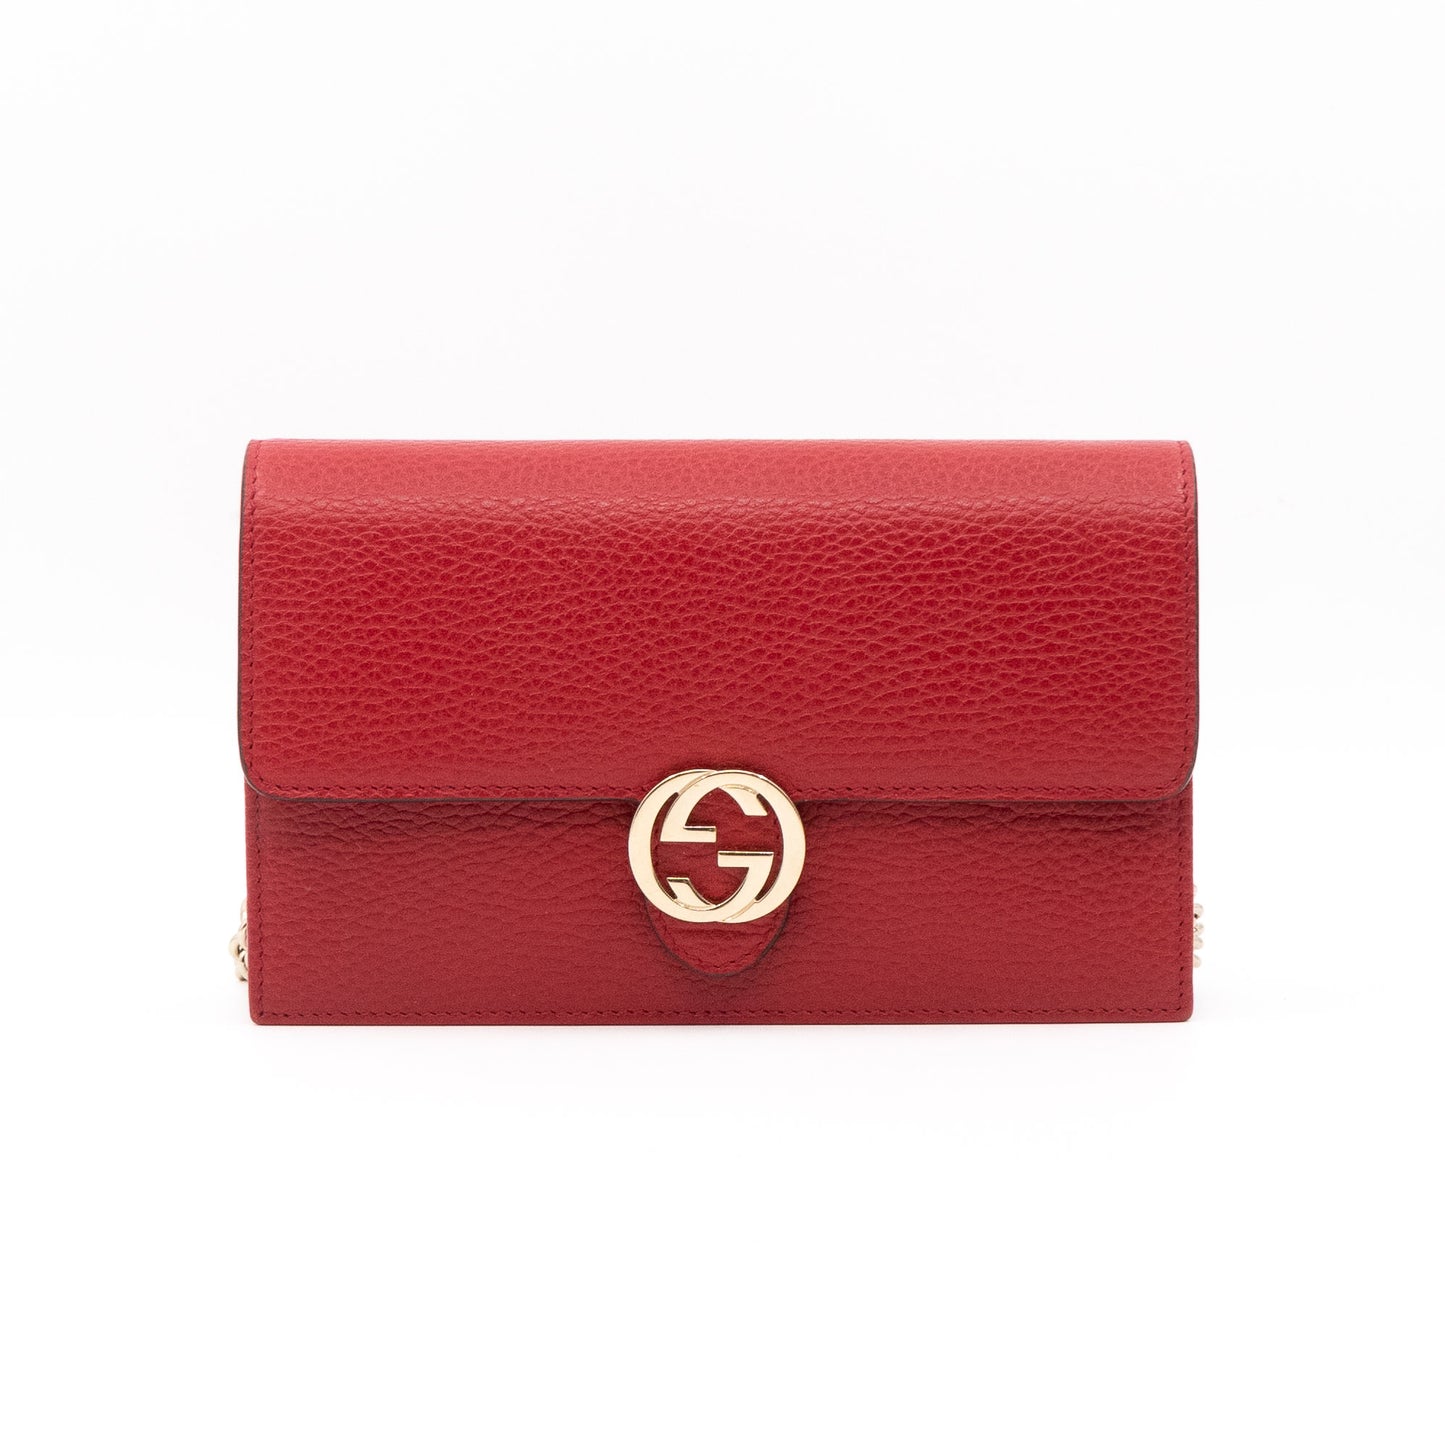 Interlocking GG Chain Wallet Red Leather